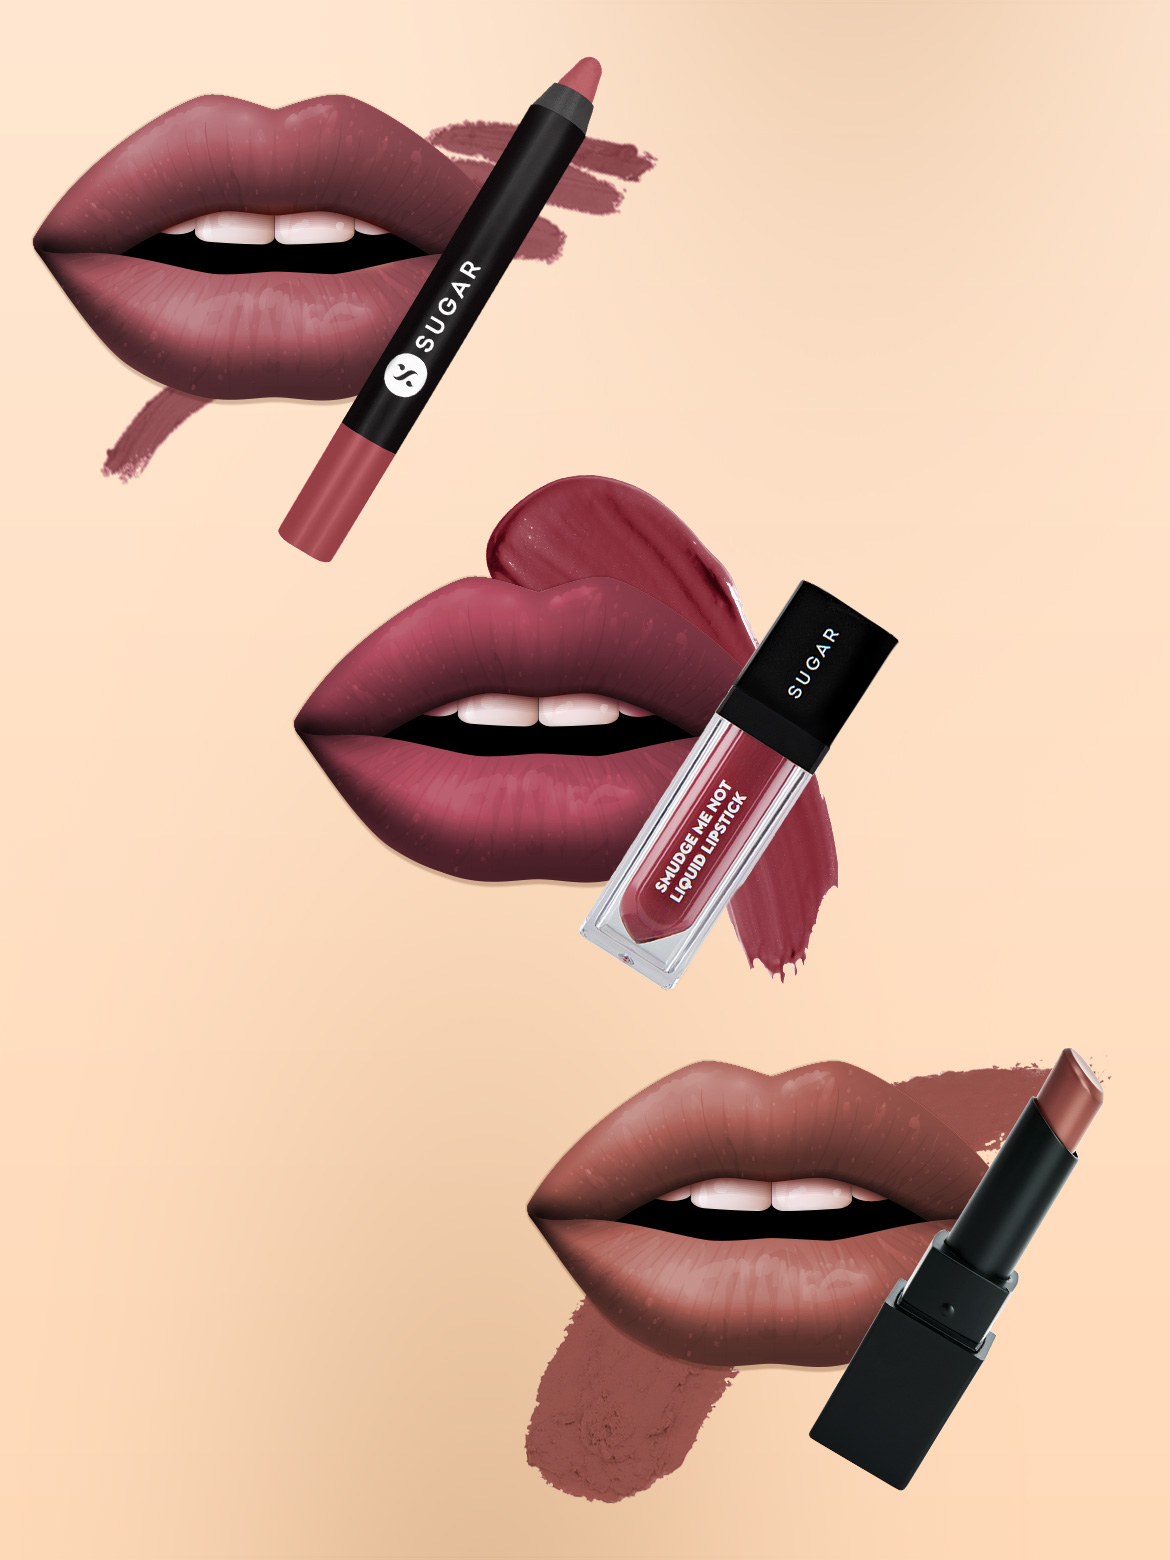 Stunning makeup looks 2021 : Rosy Pink Matte Lips